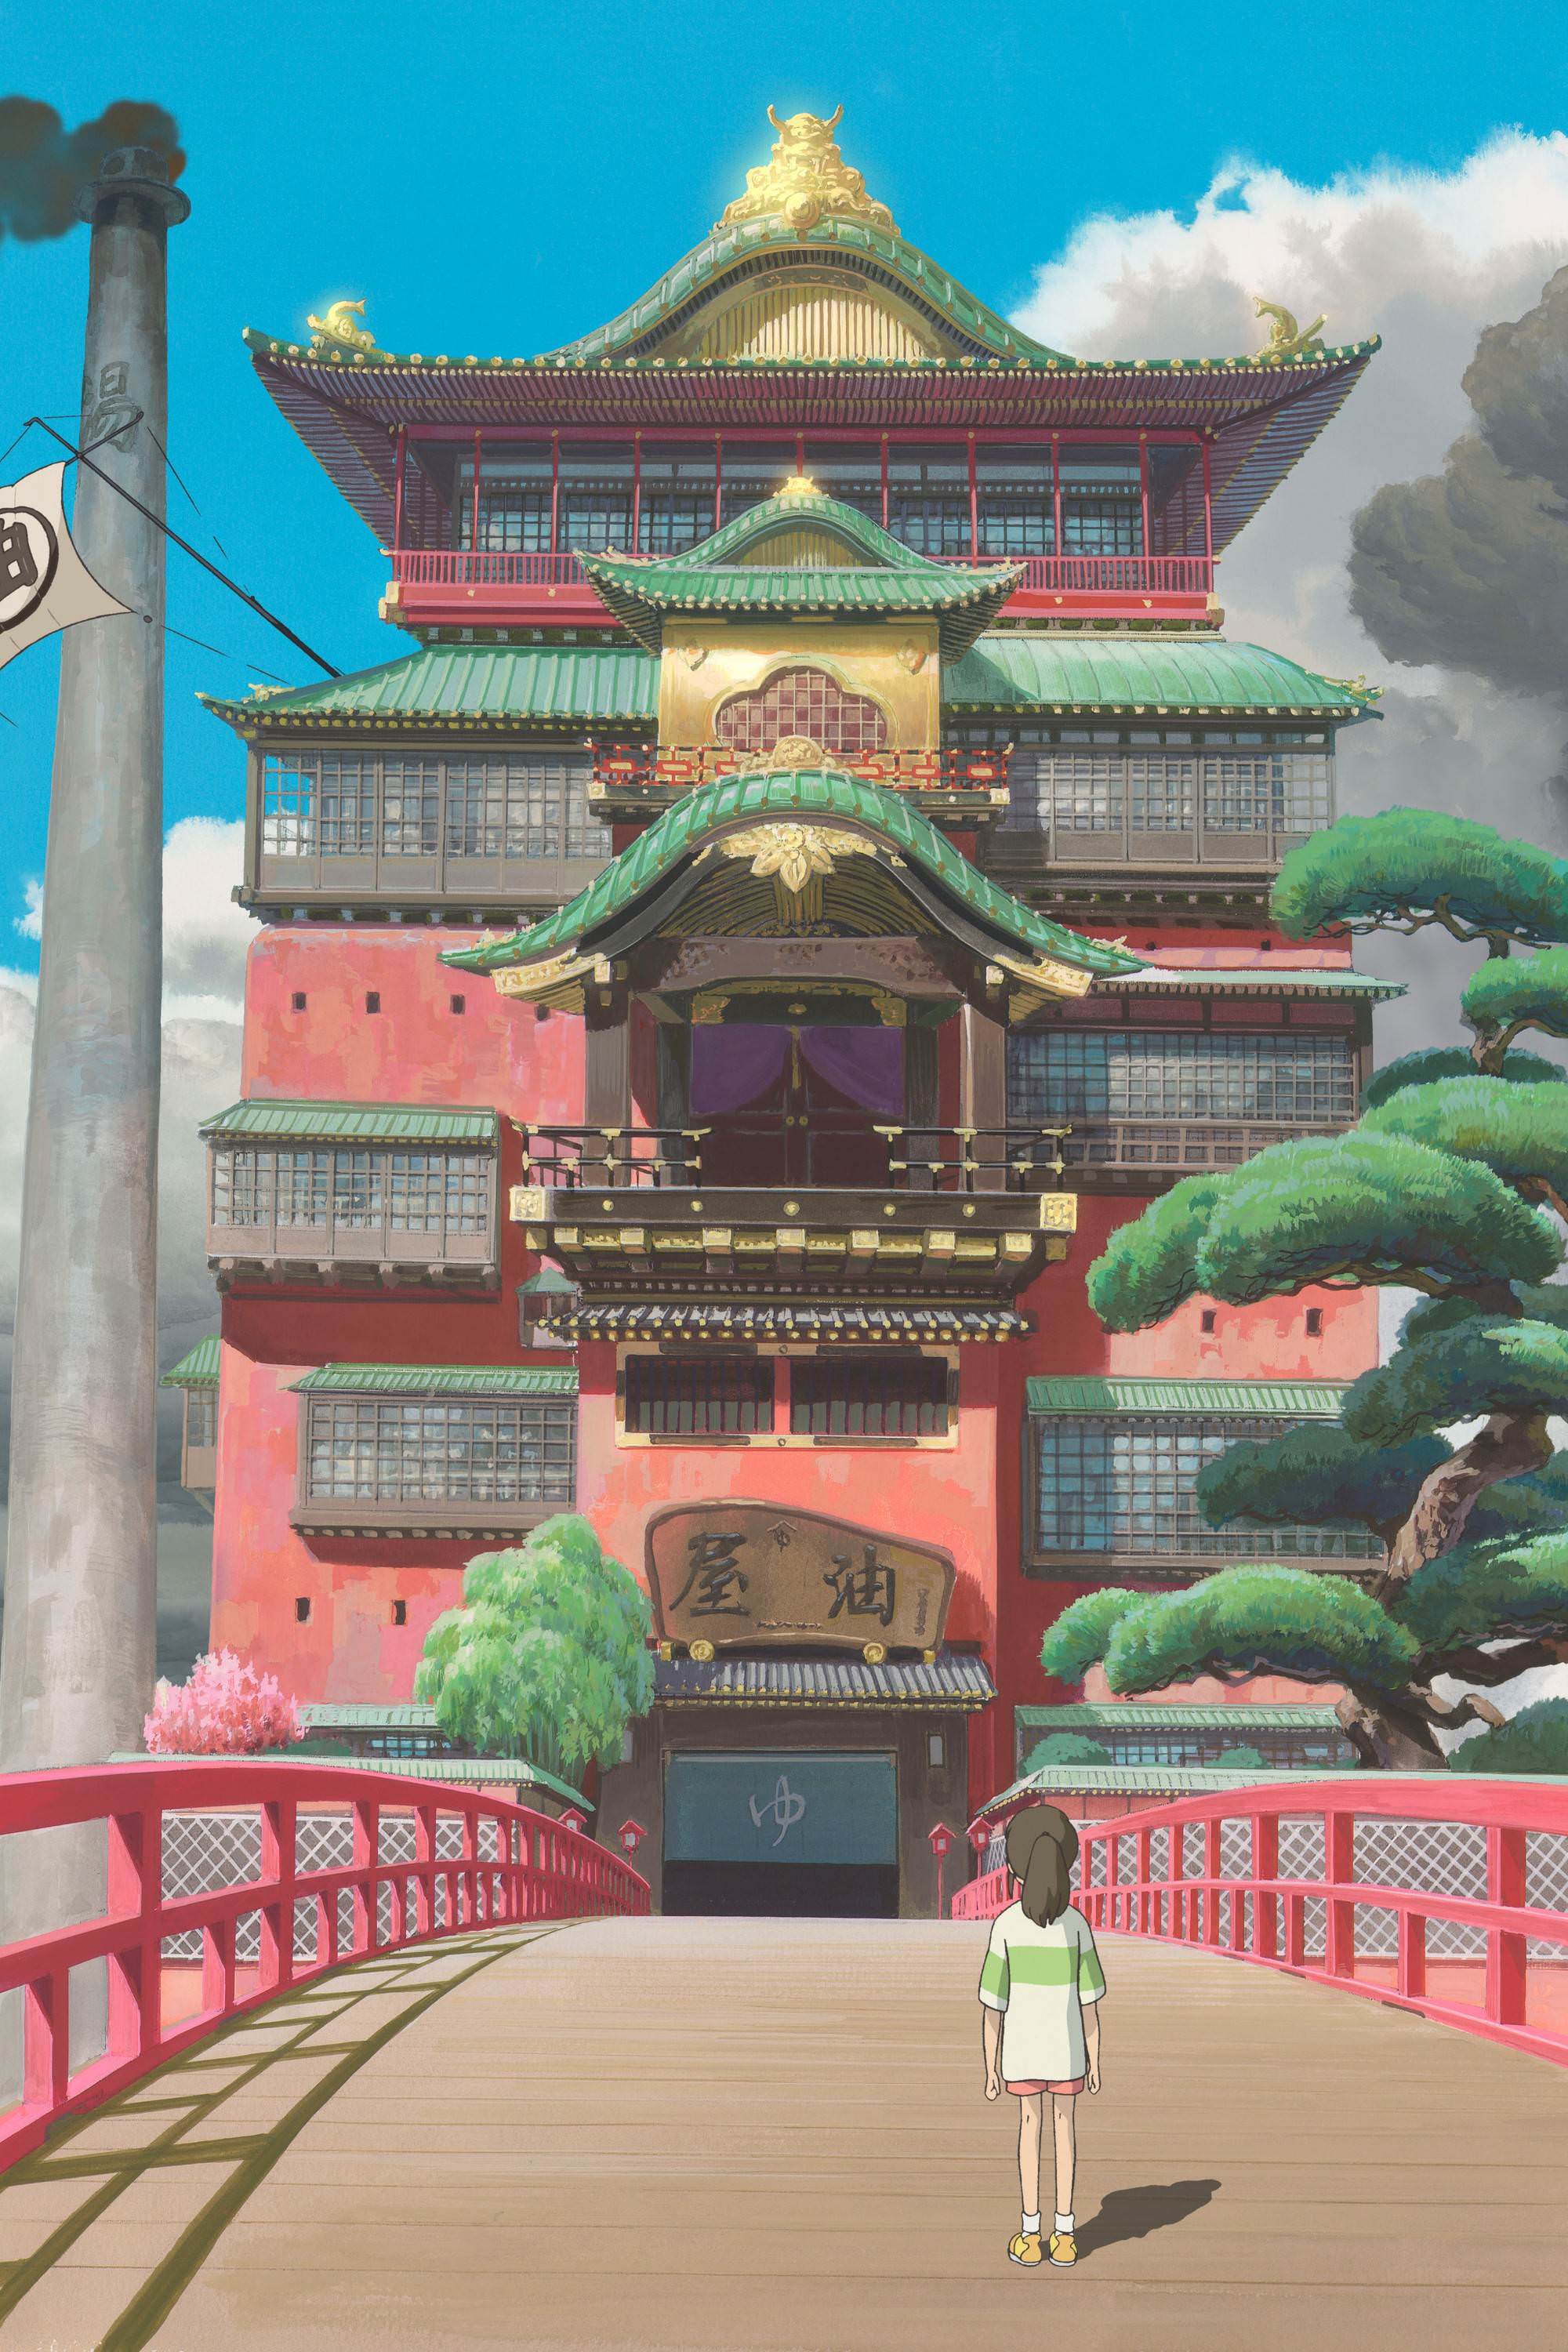 sfondi animati per iphone,architettura cinese,architettura giapponese,pagoda,santuario,architettura